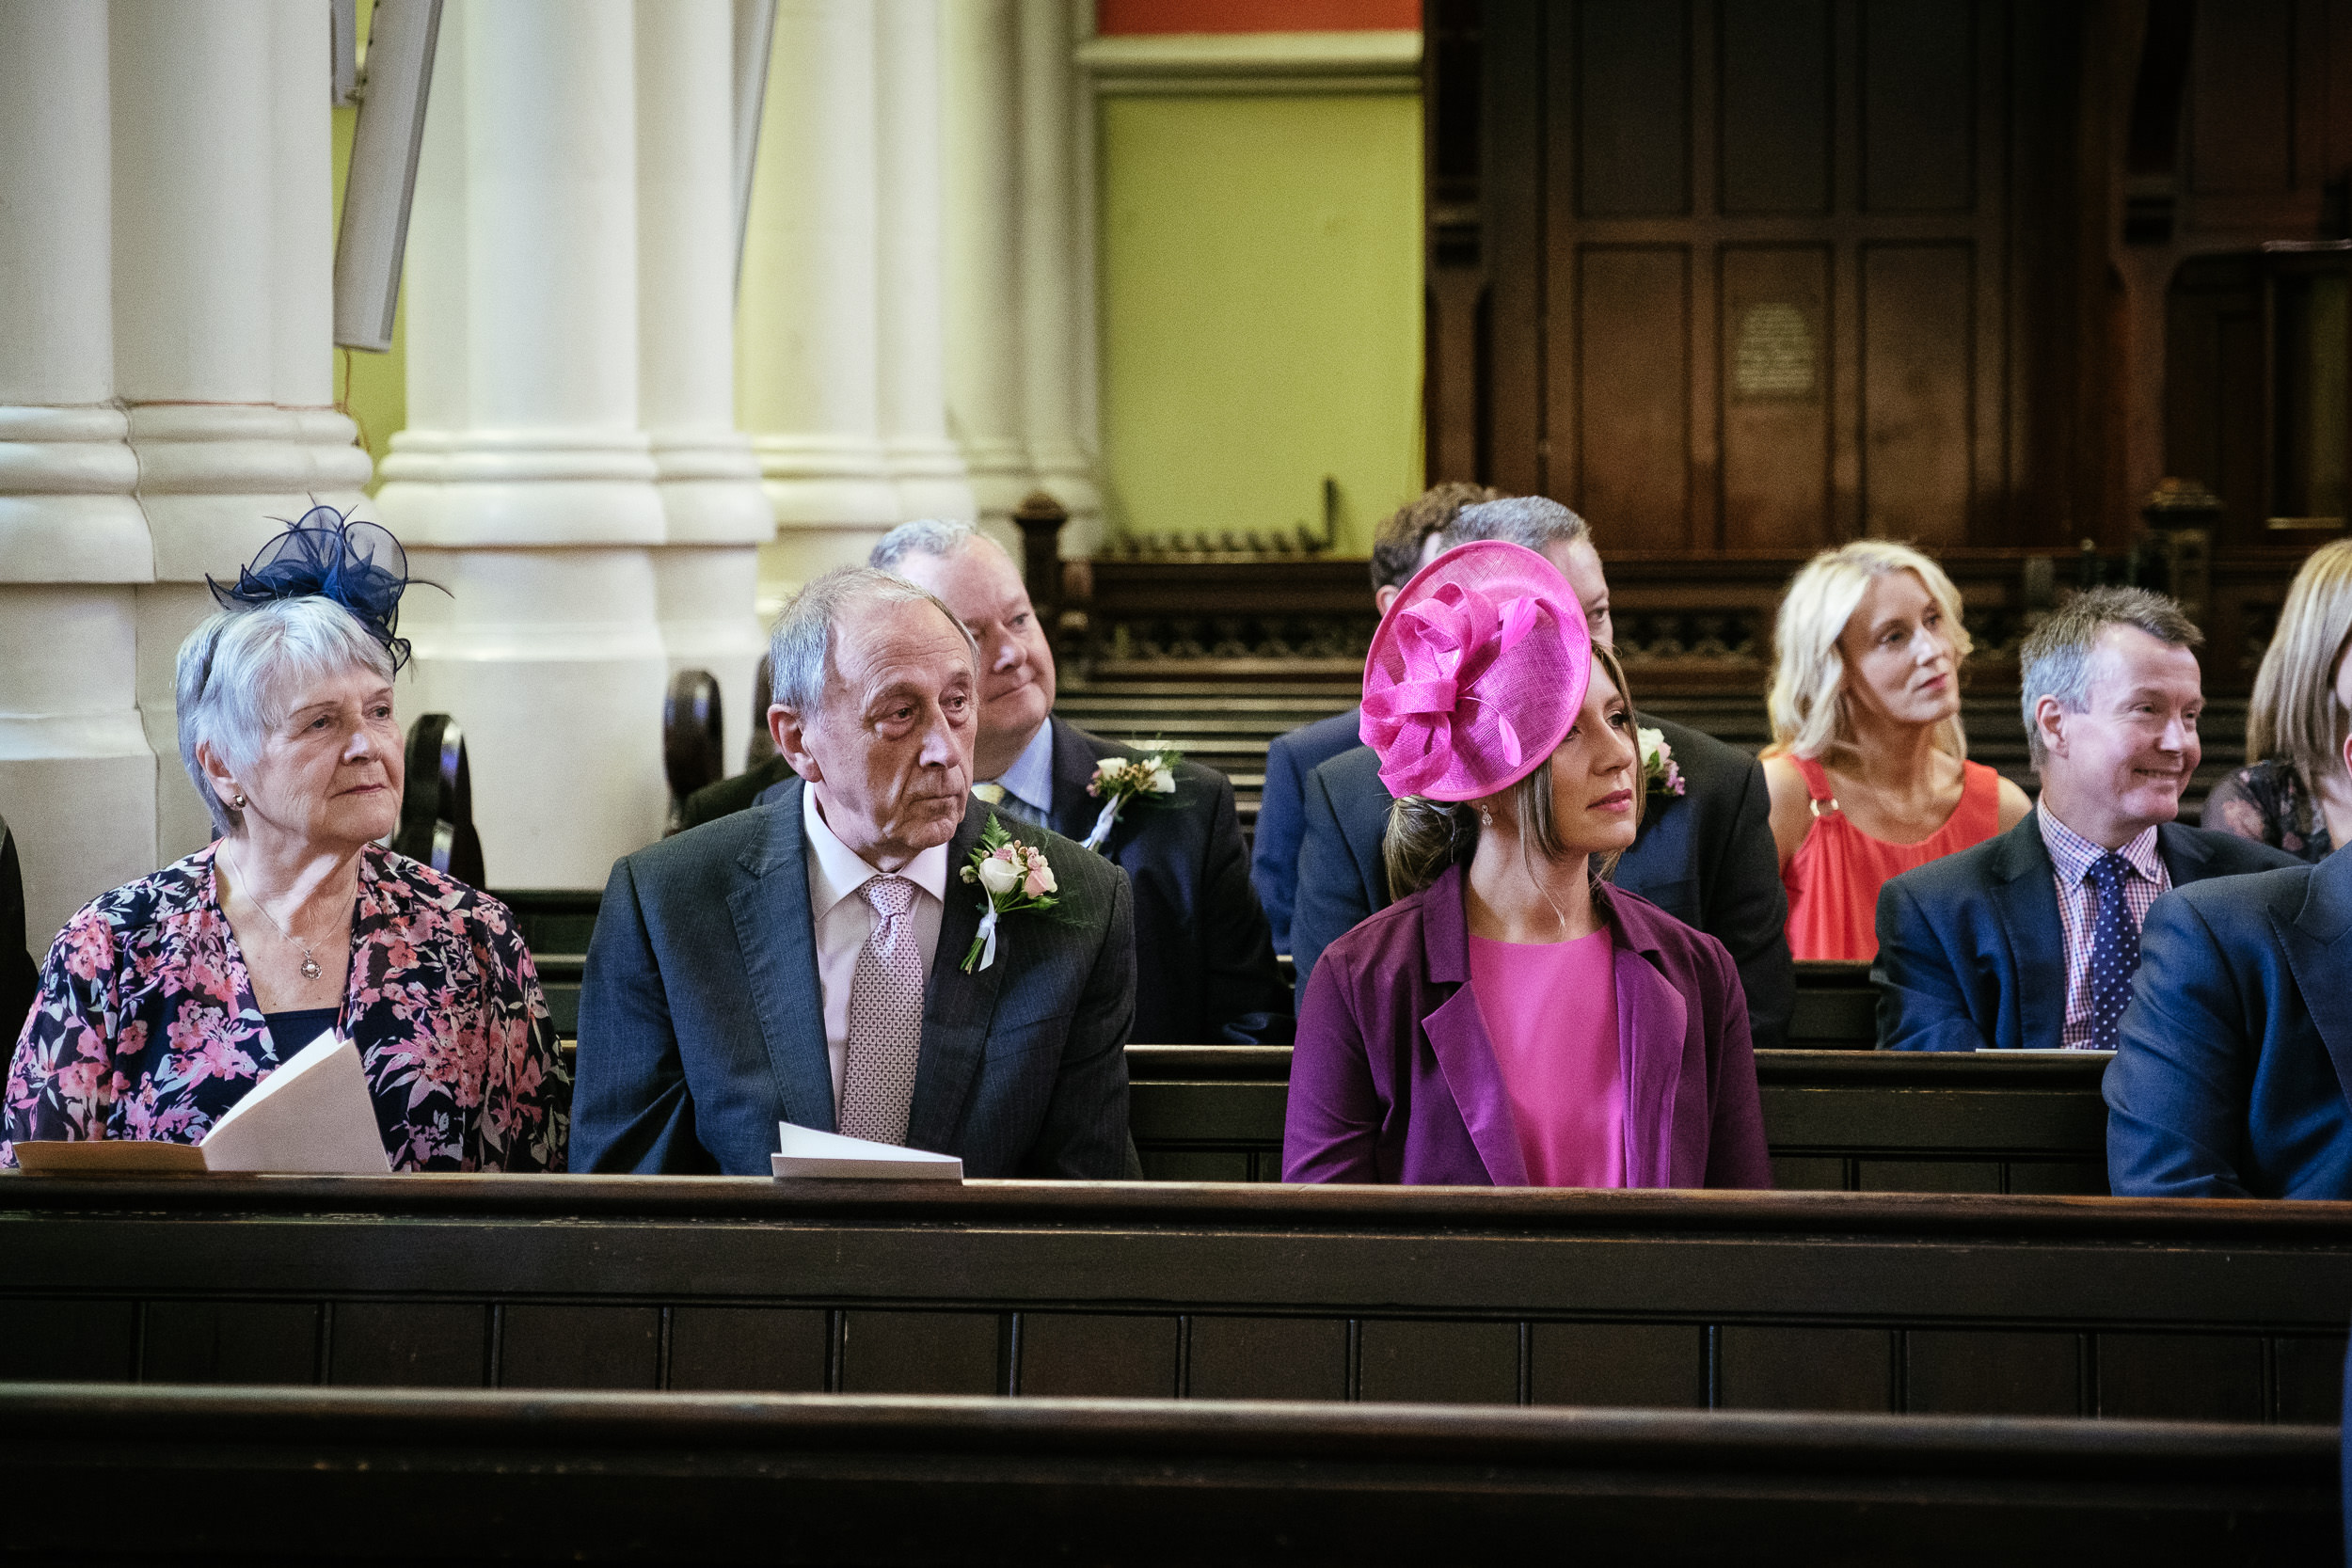 wedding guests at the Dublin Unitarian Church